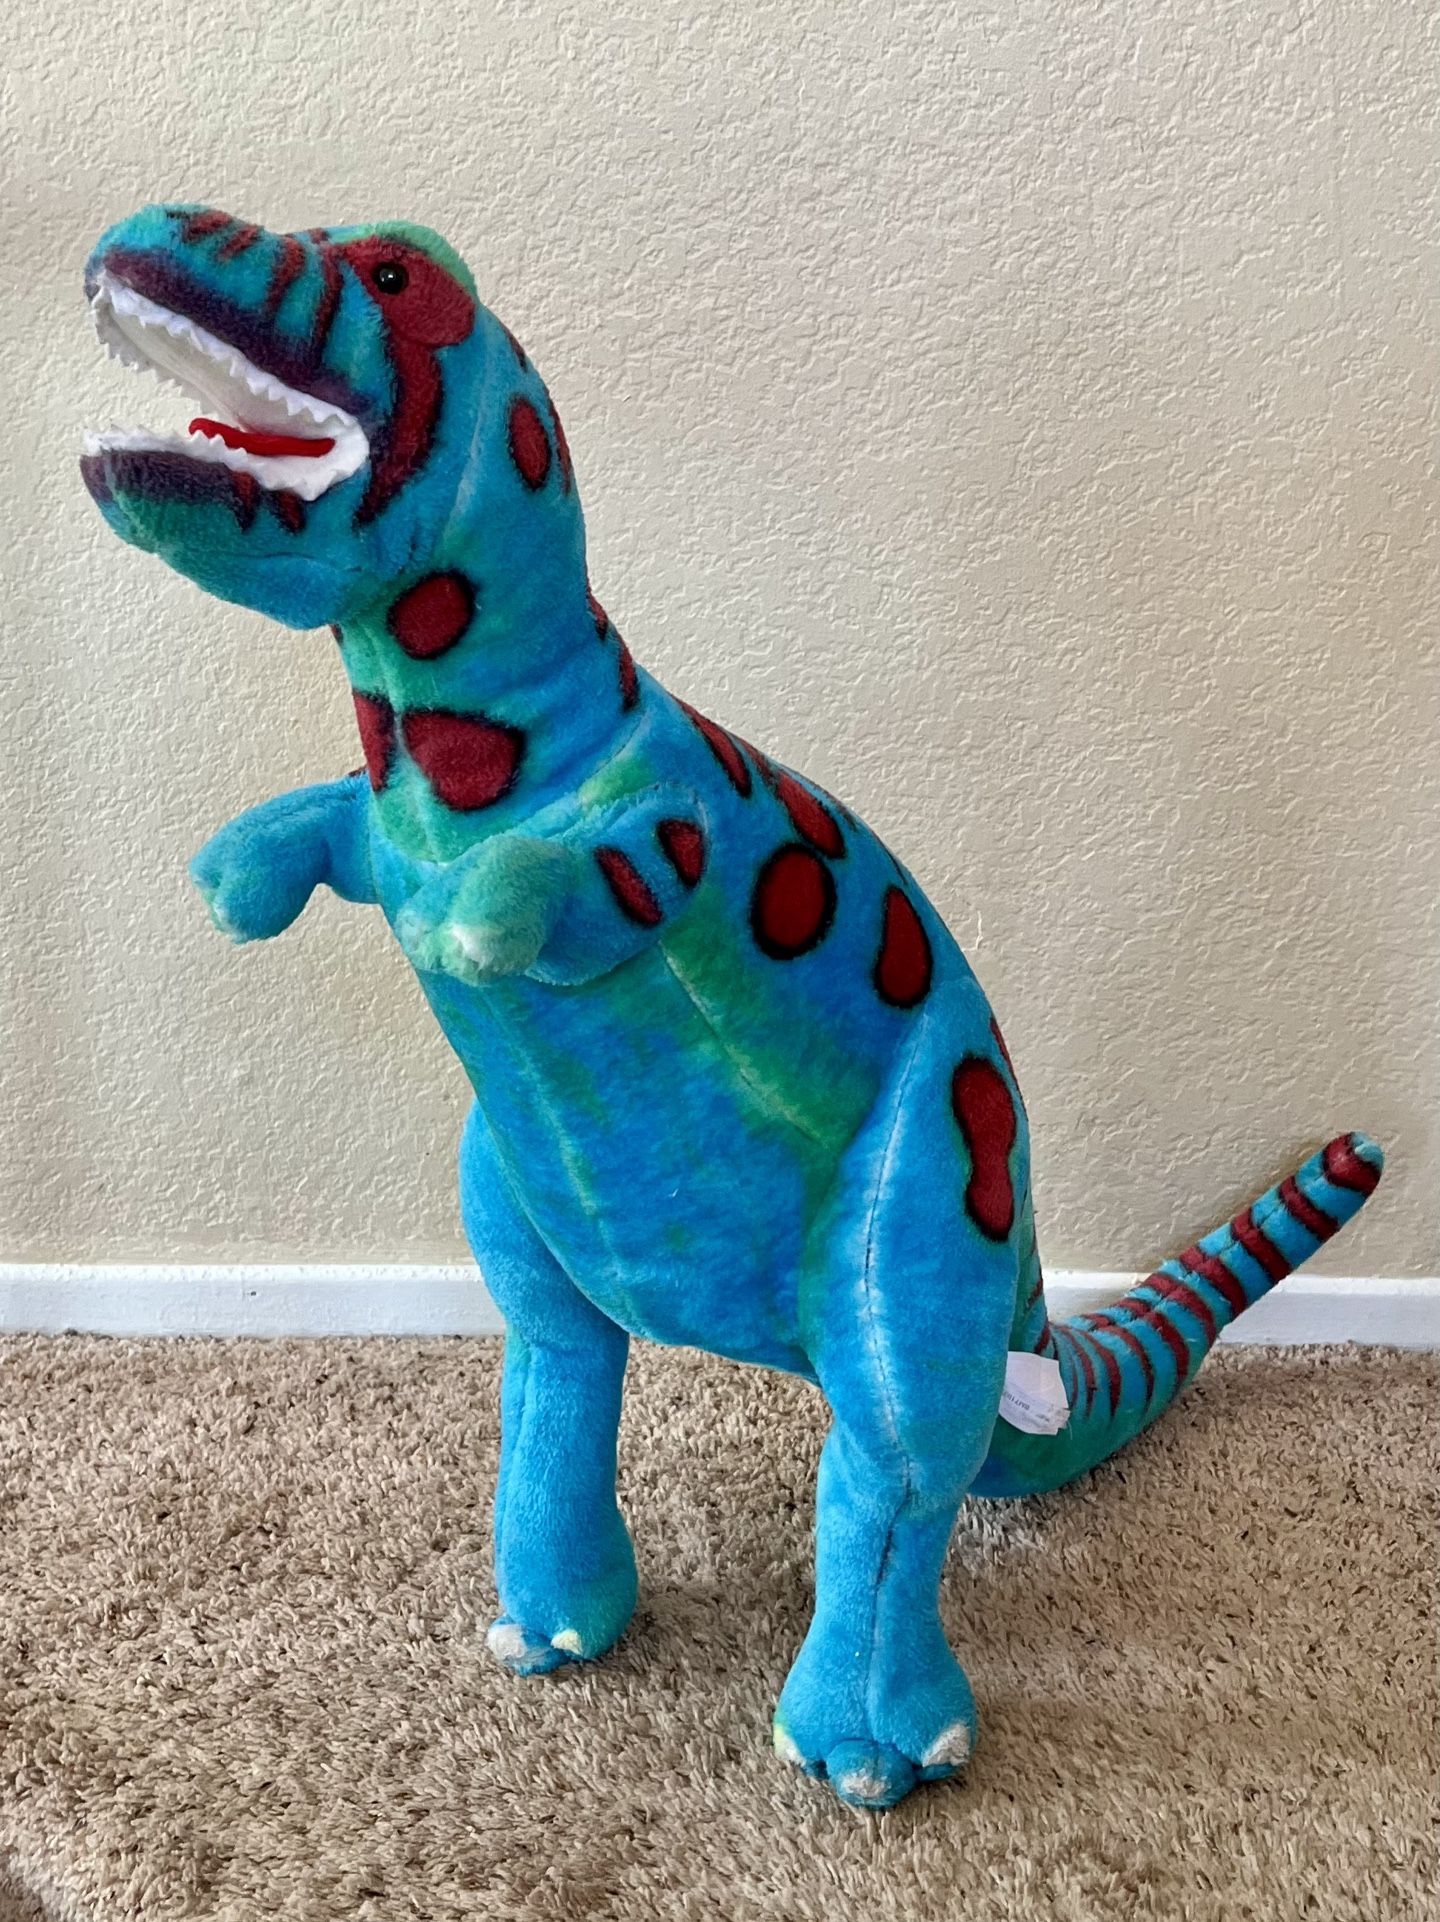 Melissa & Doug T-Rex Dinosaur - Lifelike Stuffed Animal (over 2 feet tall)